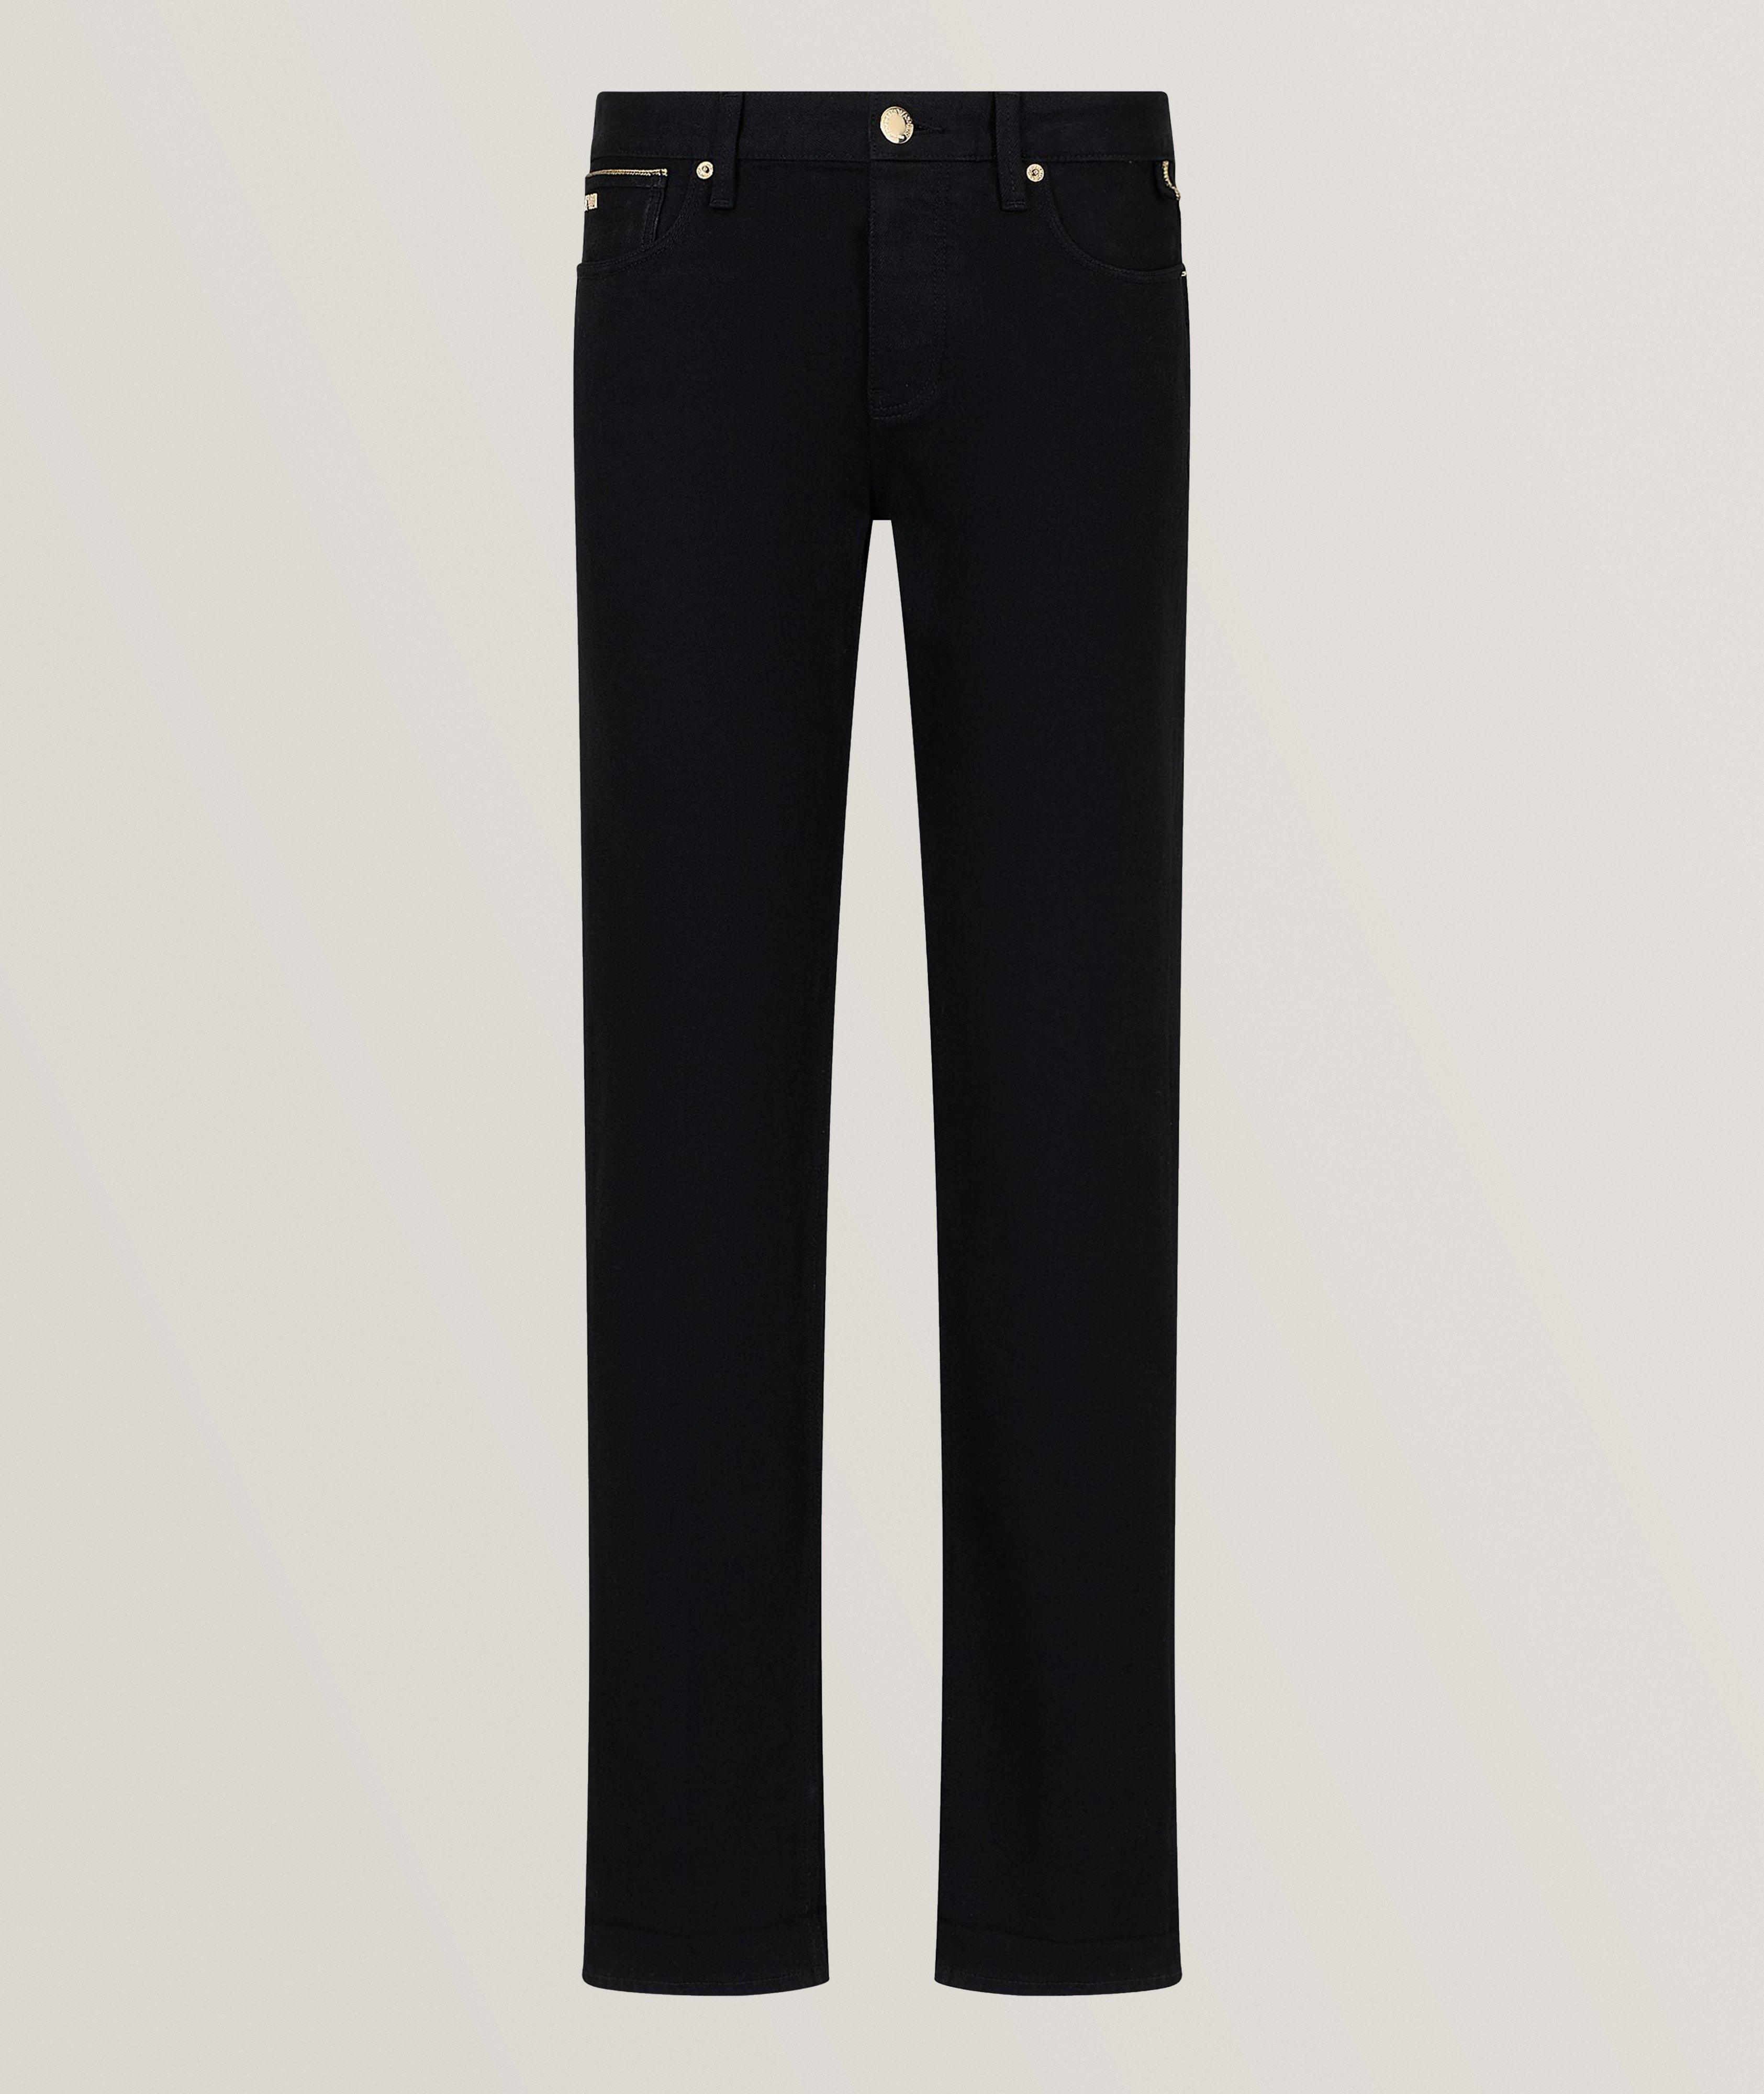 Slim Fit Five-Pocket Style Stretch-Cotton Jeans image 0